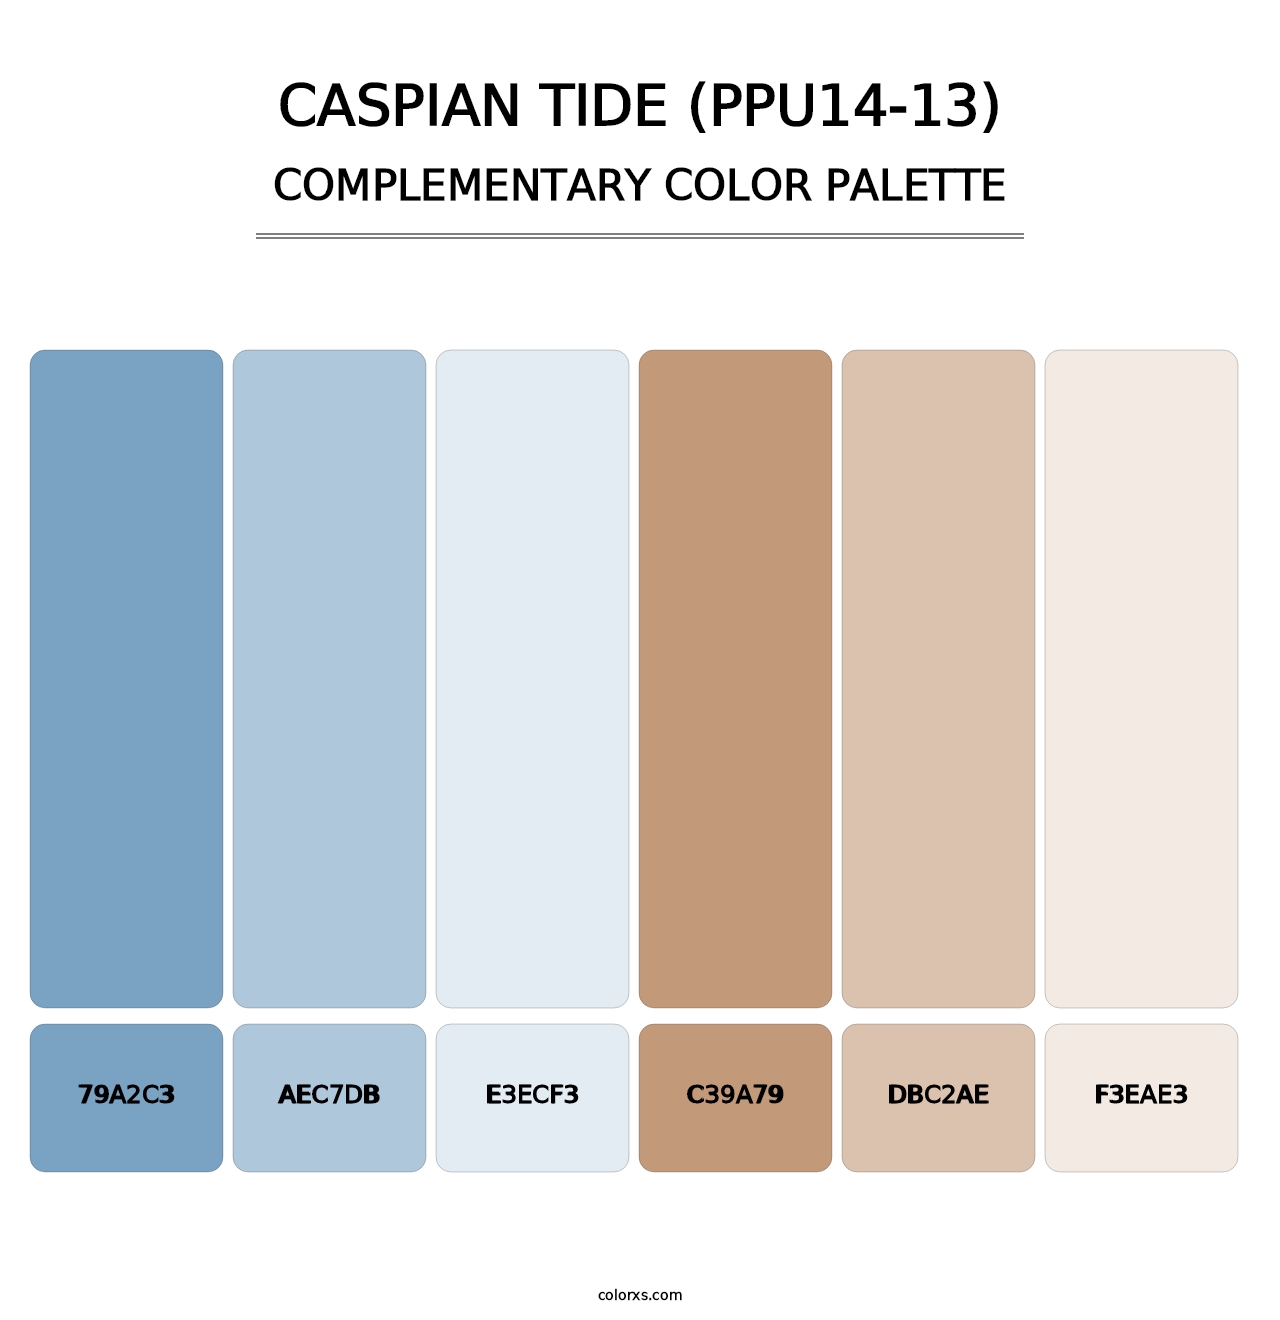 Caspian Tide (PPU14-13) - Complementary Color Palette